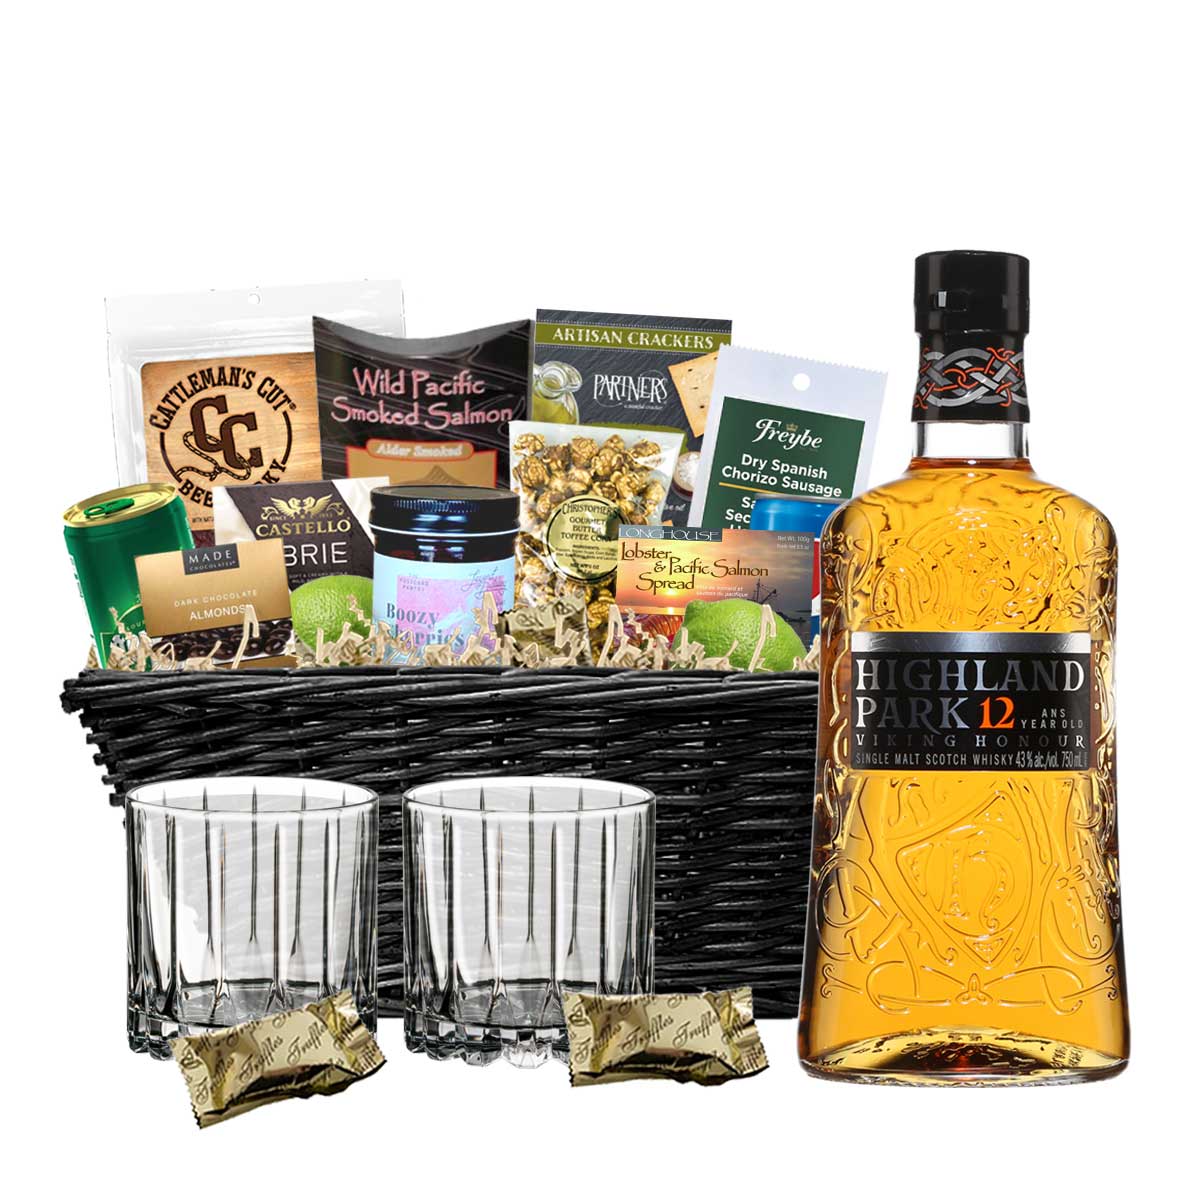 TAG Liquor Stores BC - Highland Park 12 Year Scotch Whisky 750ml Gift Basket